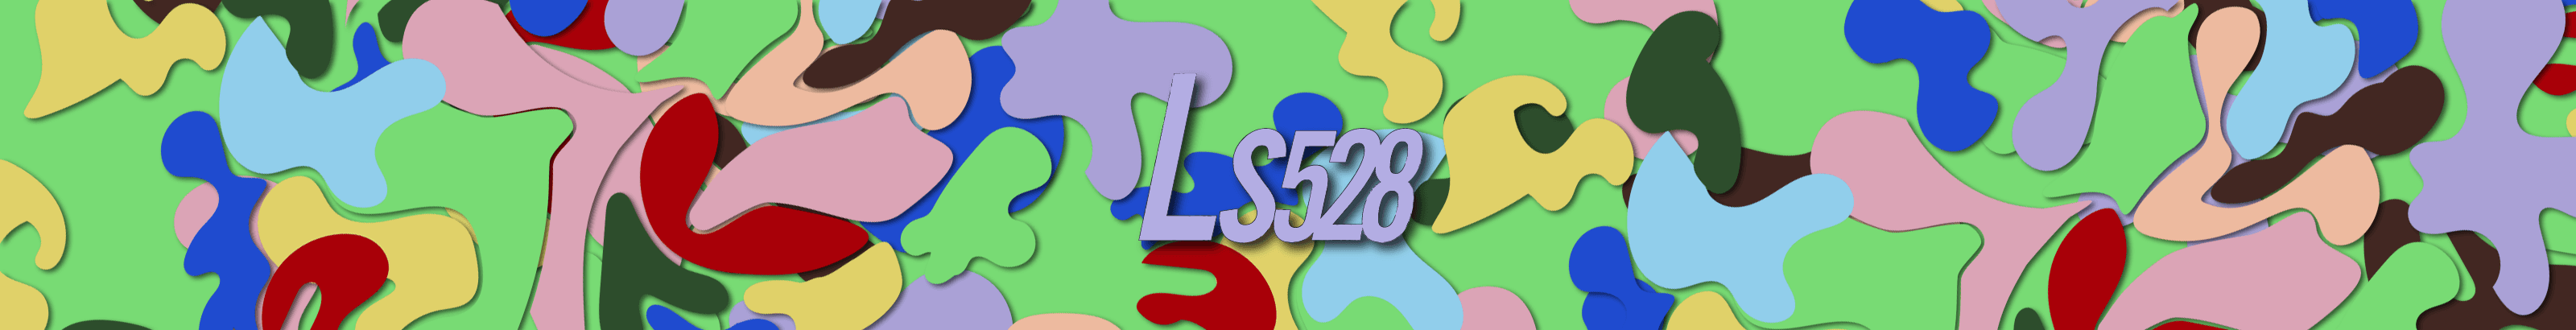 Ls528 banner